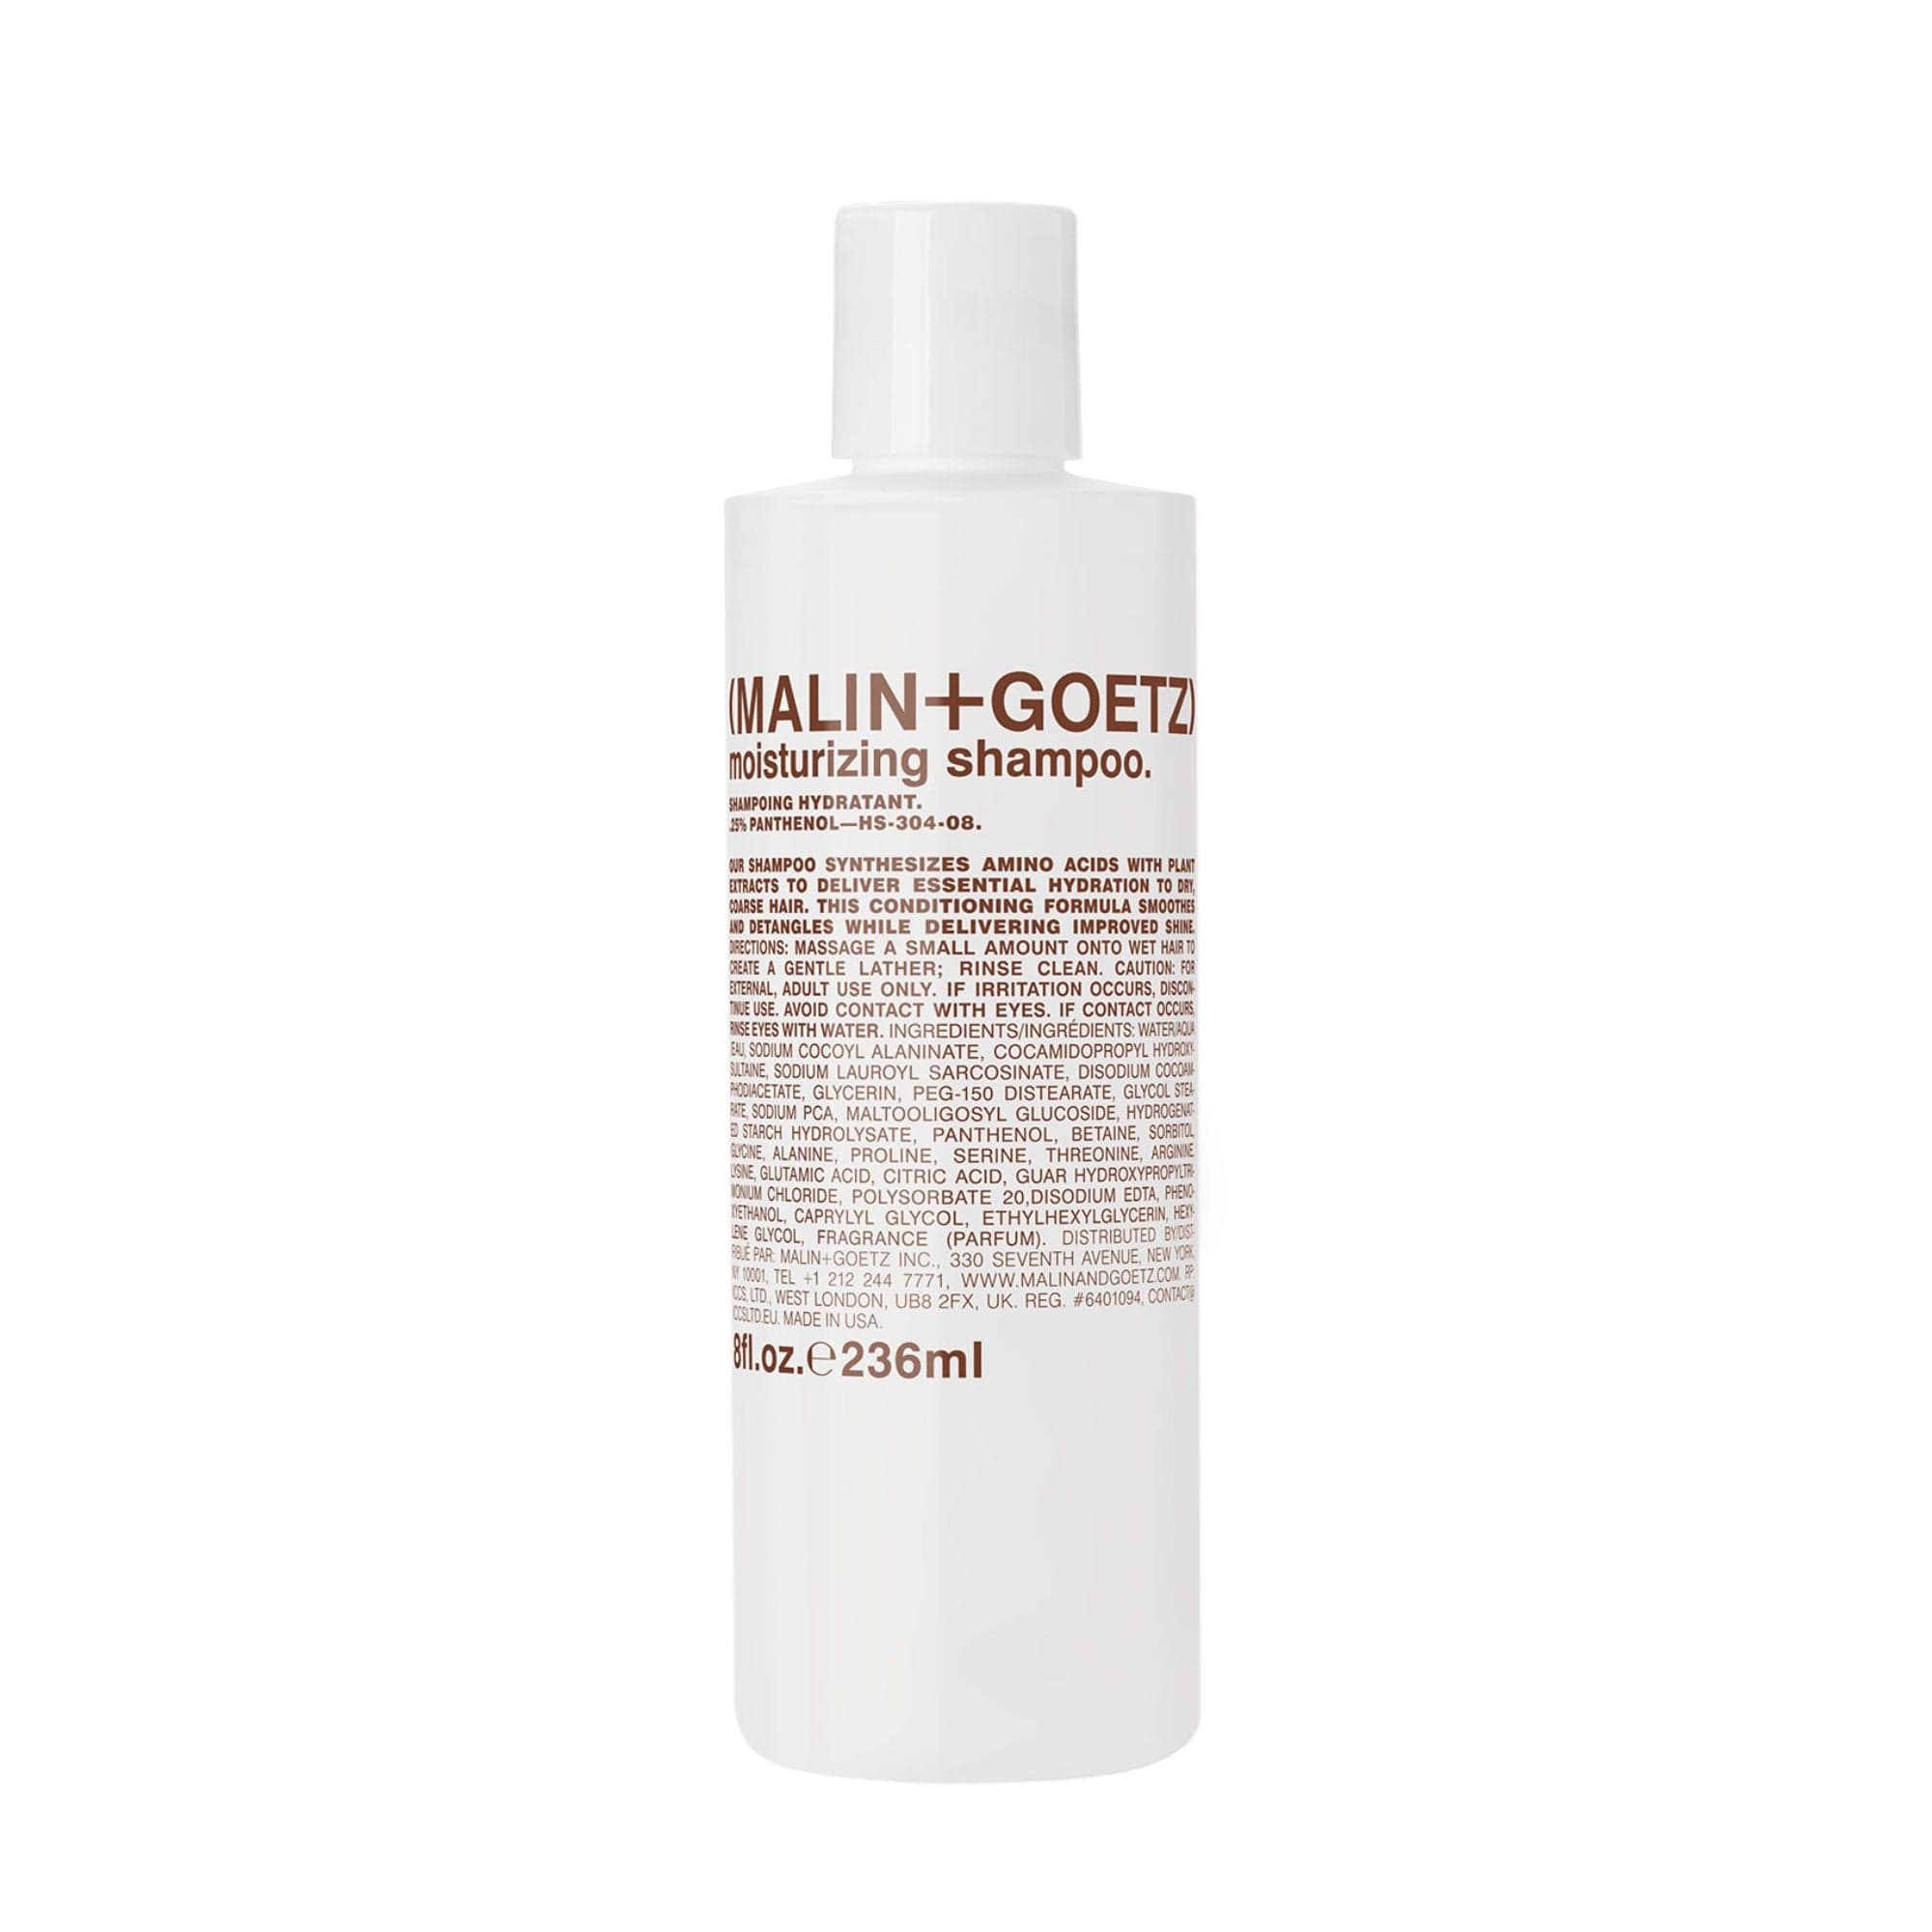 Moisturizing Shampoo (MALIN+GOETZ) - Moisturizing Shampoo